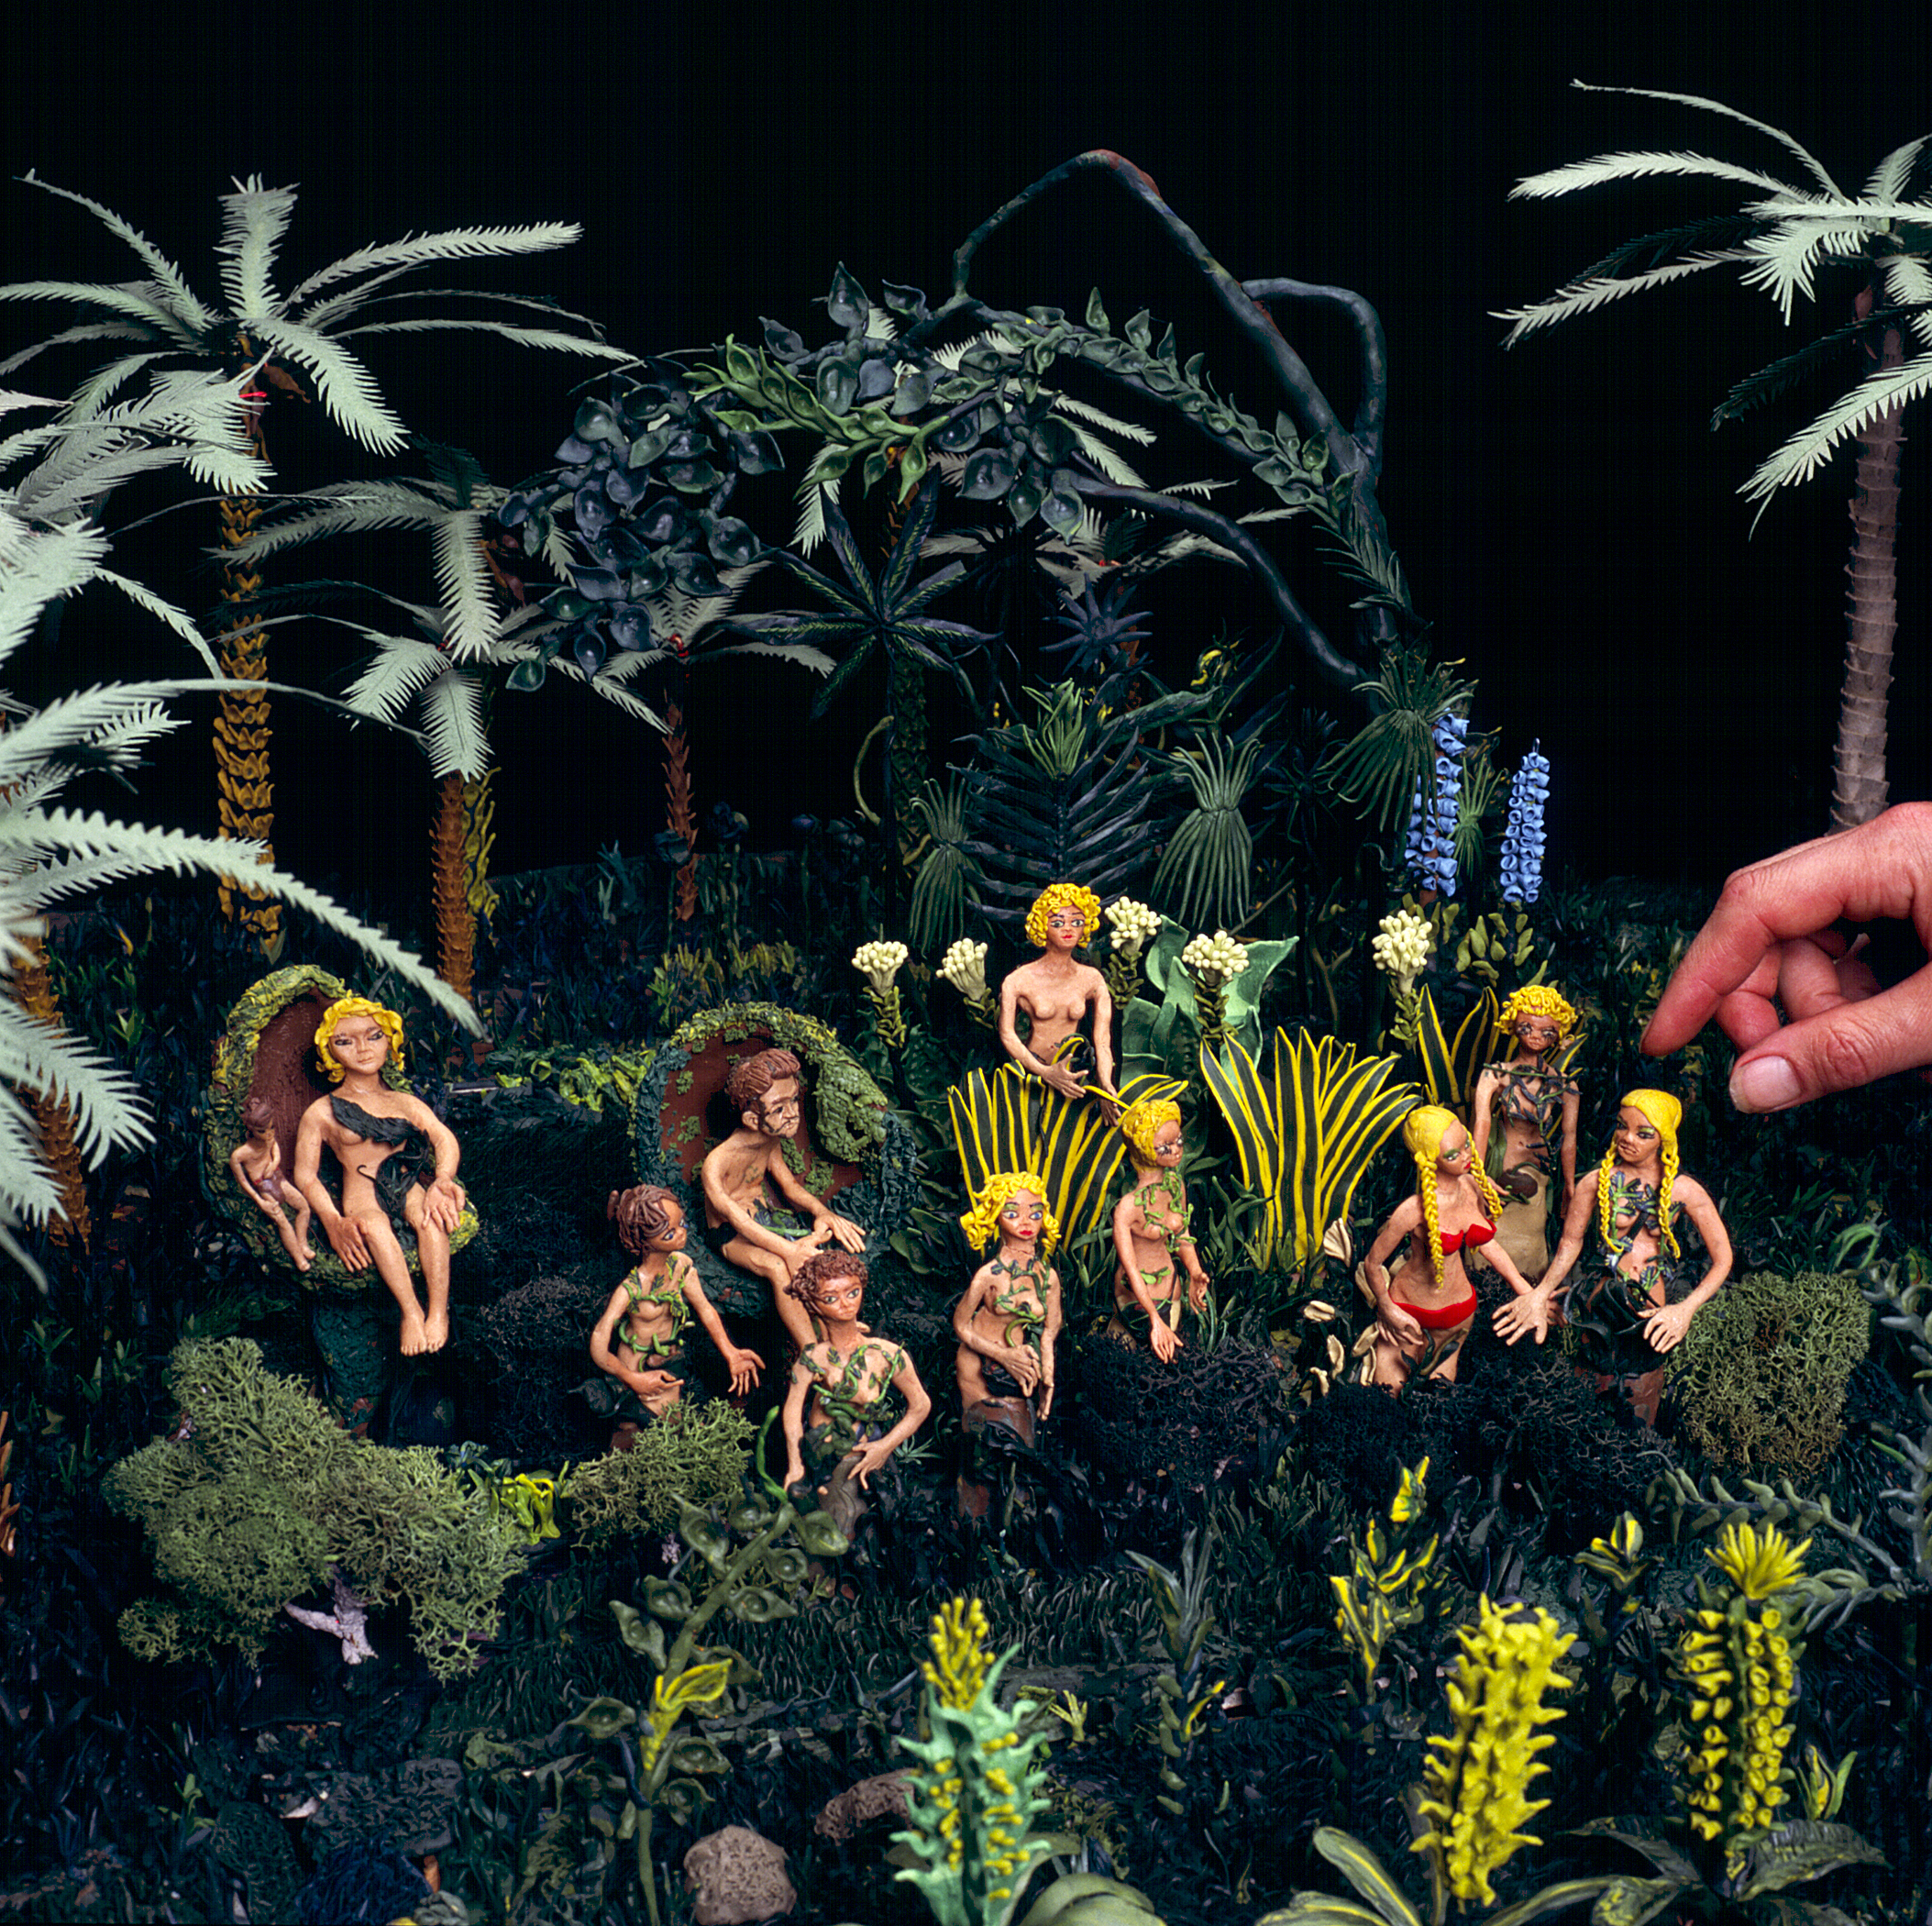 Bruce Brickford, Prometheus, Garden of Nymphs, Clay figures